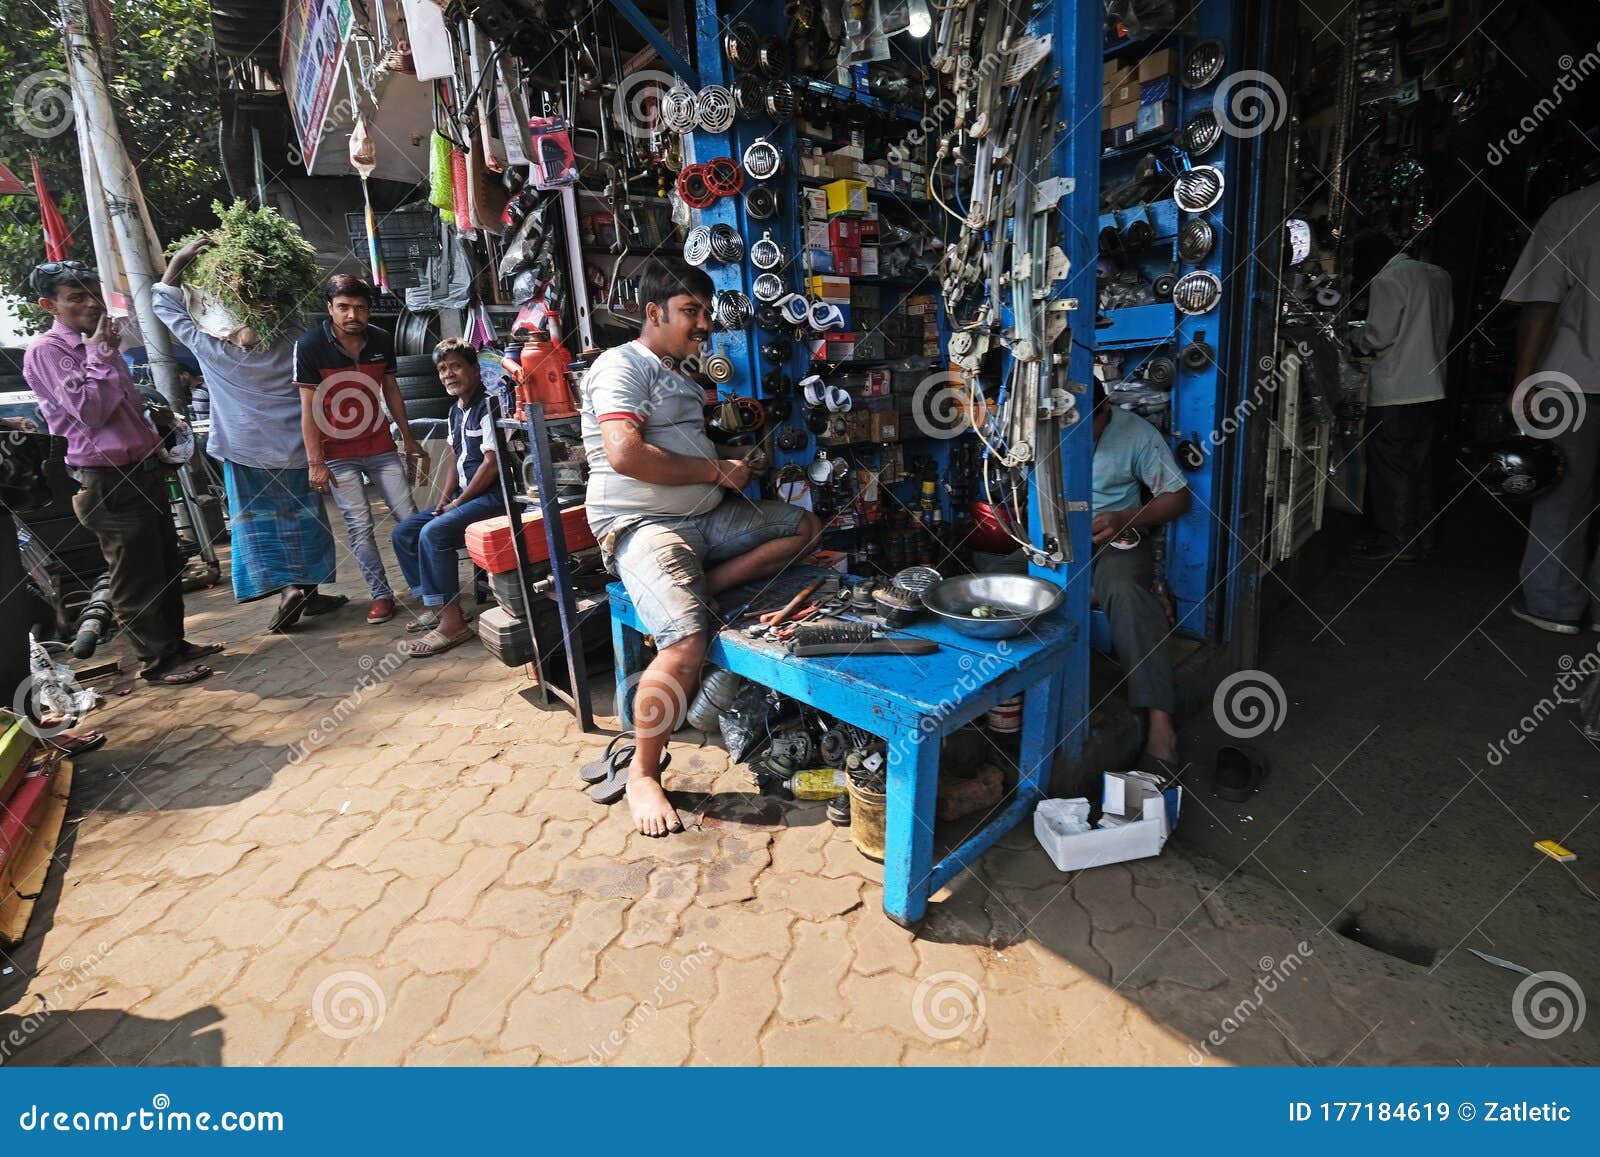 Cheapest Car Parts And Accessories Market, Mallick Bazar In Kolkata Editorial Stock Image ...